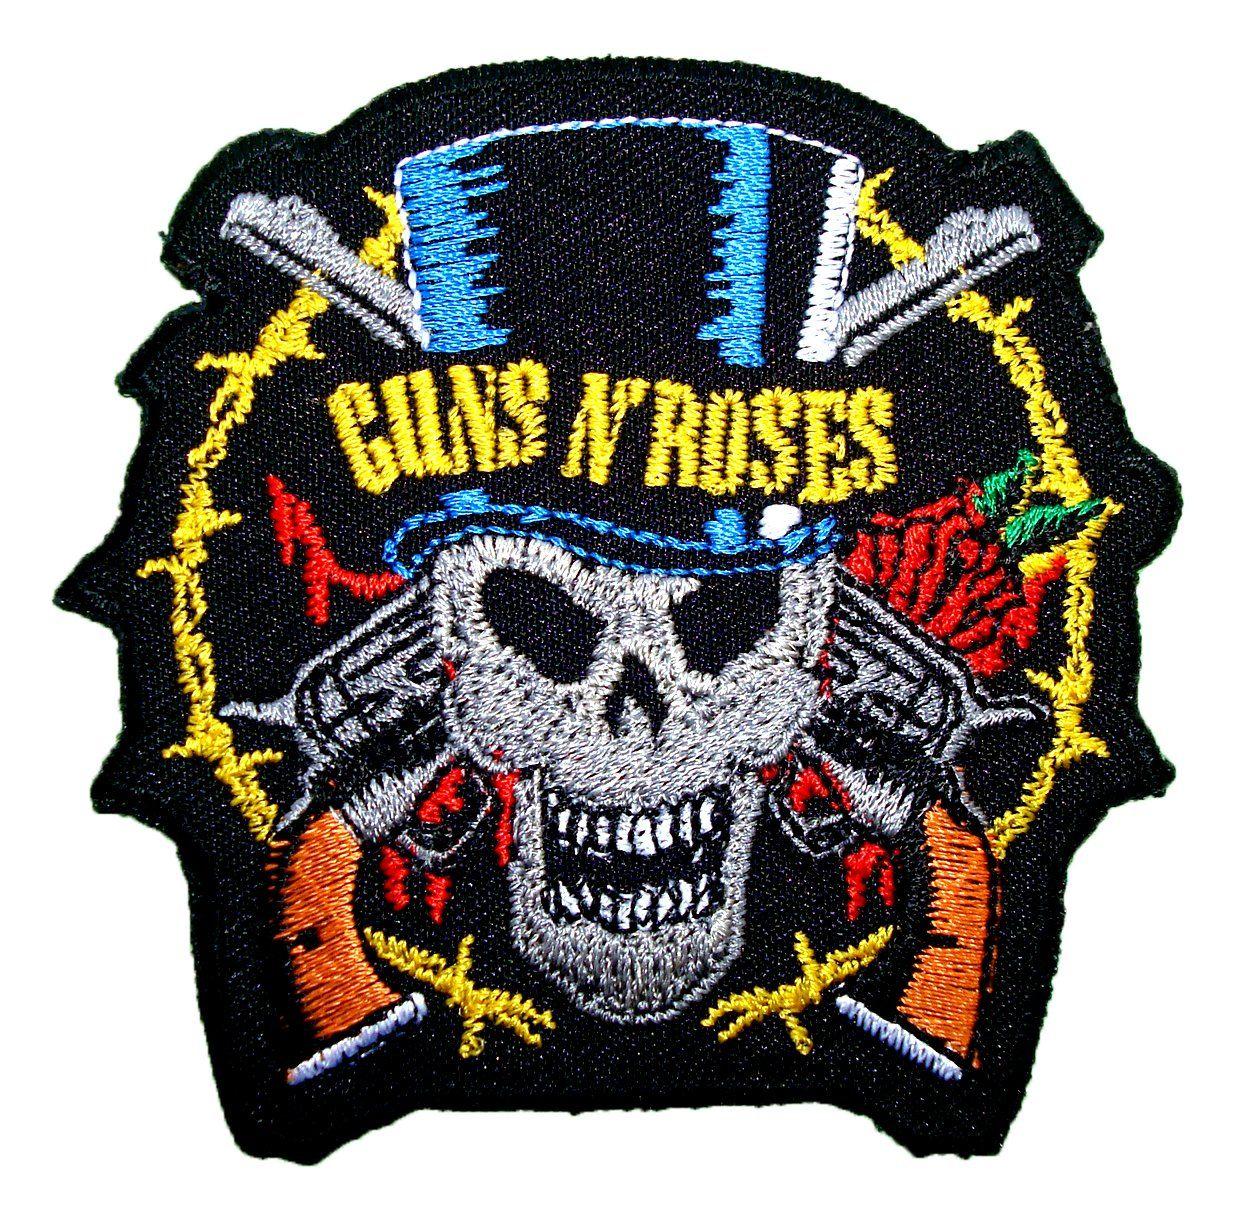 Best Rock Band Logo - Guns n Roses Rock band Symbol t Shirts MG16 iron on Patches